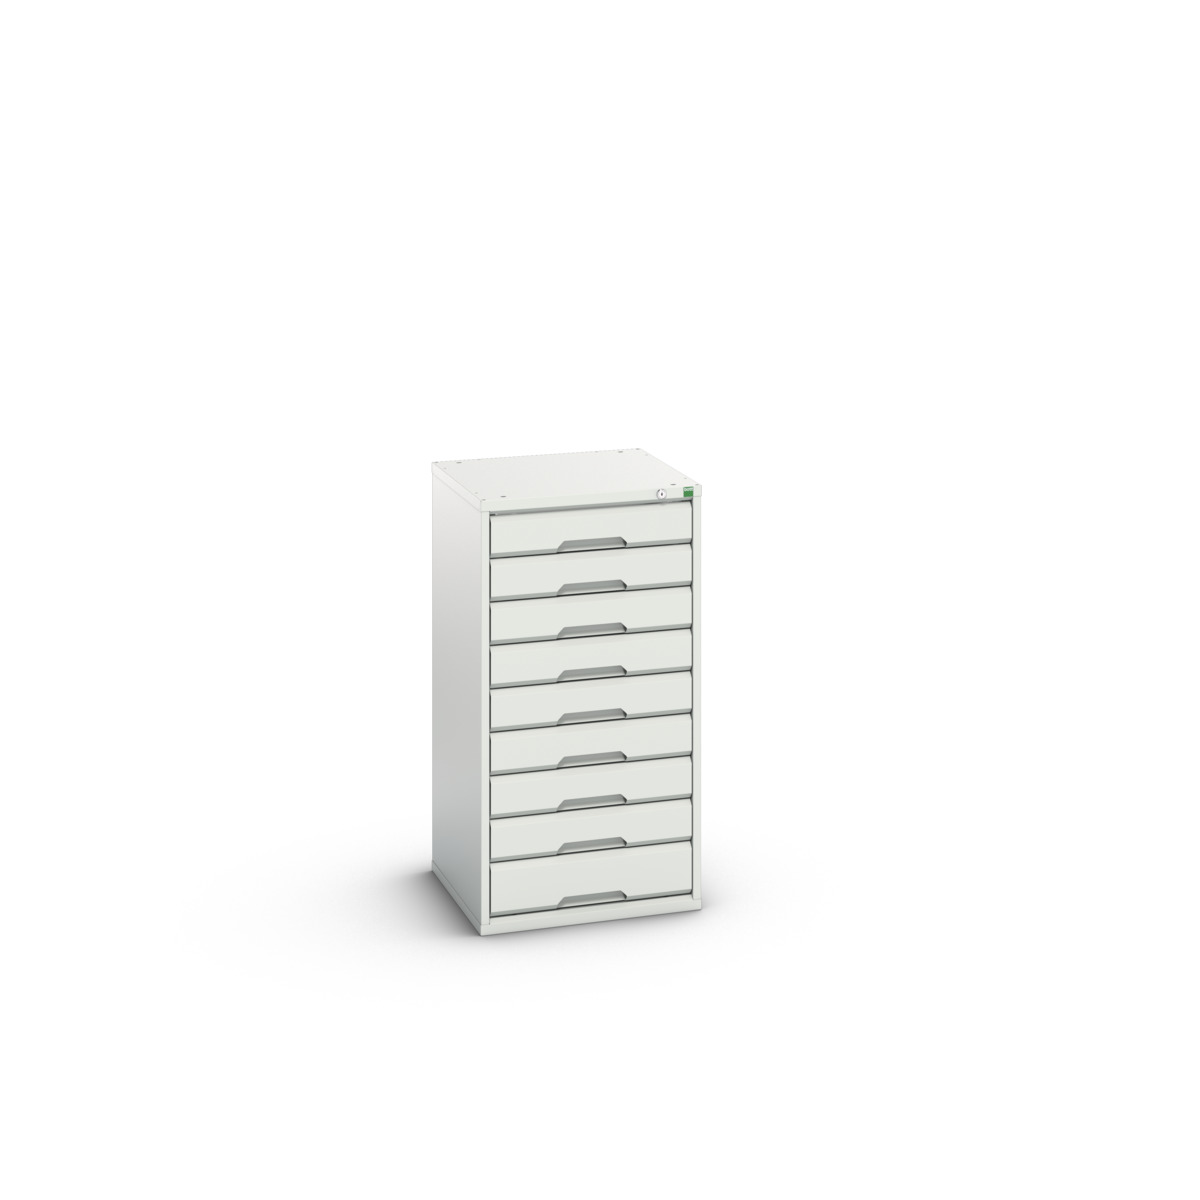 16925057.16 - verso drawer cabinet